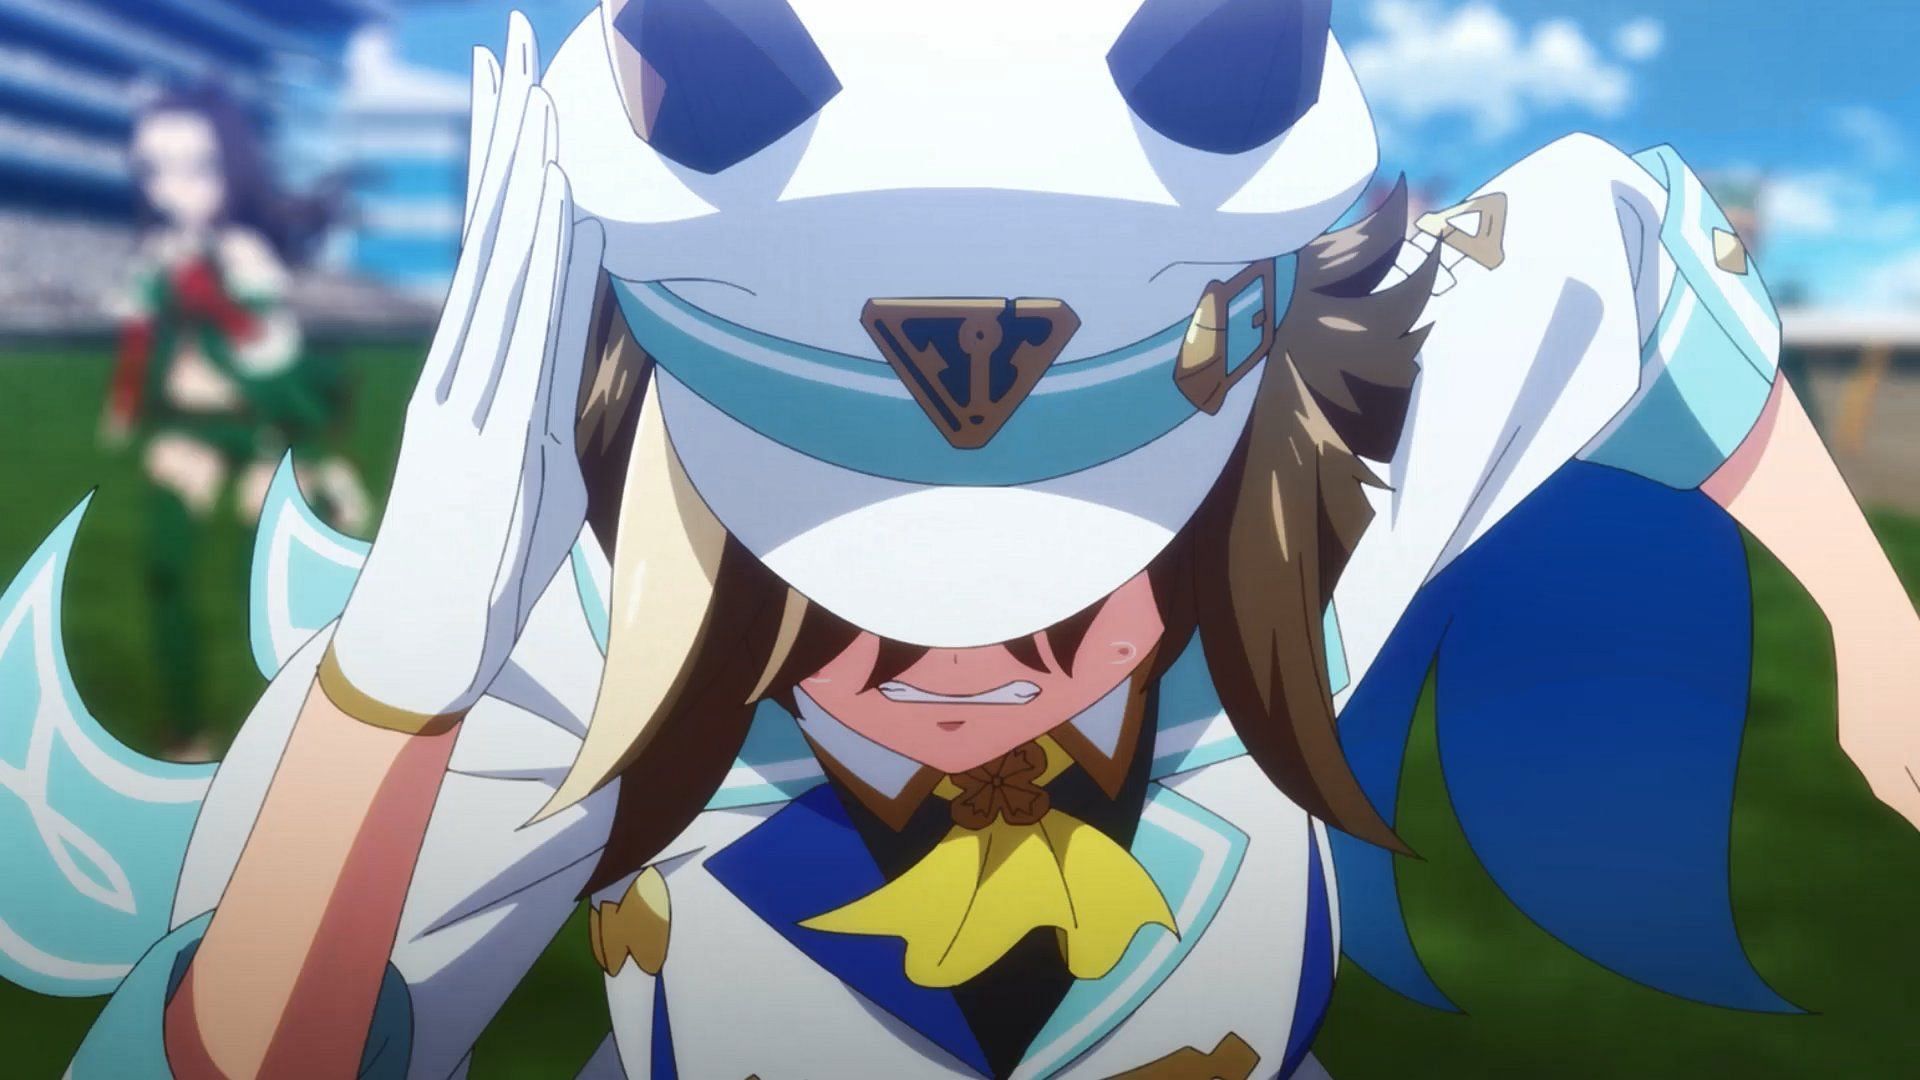 Cheval Grand as shown in anime (Image via Studio Kai)